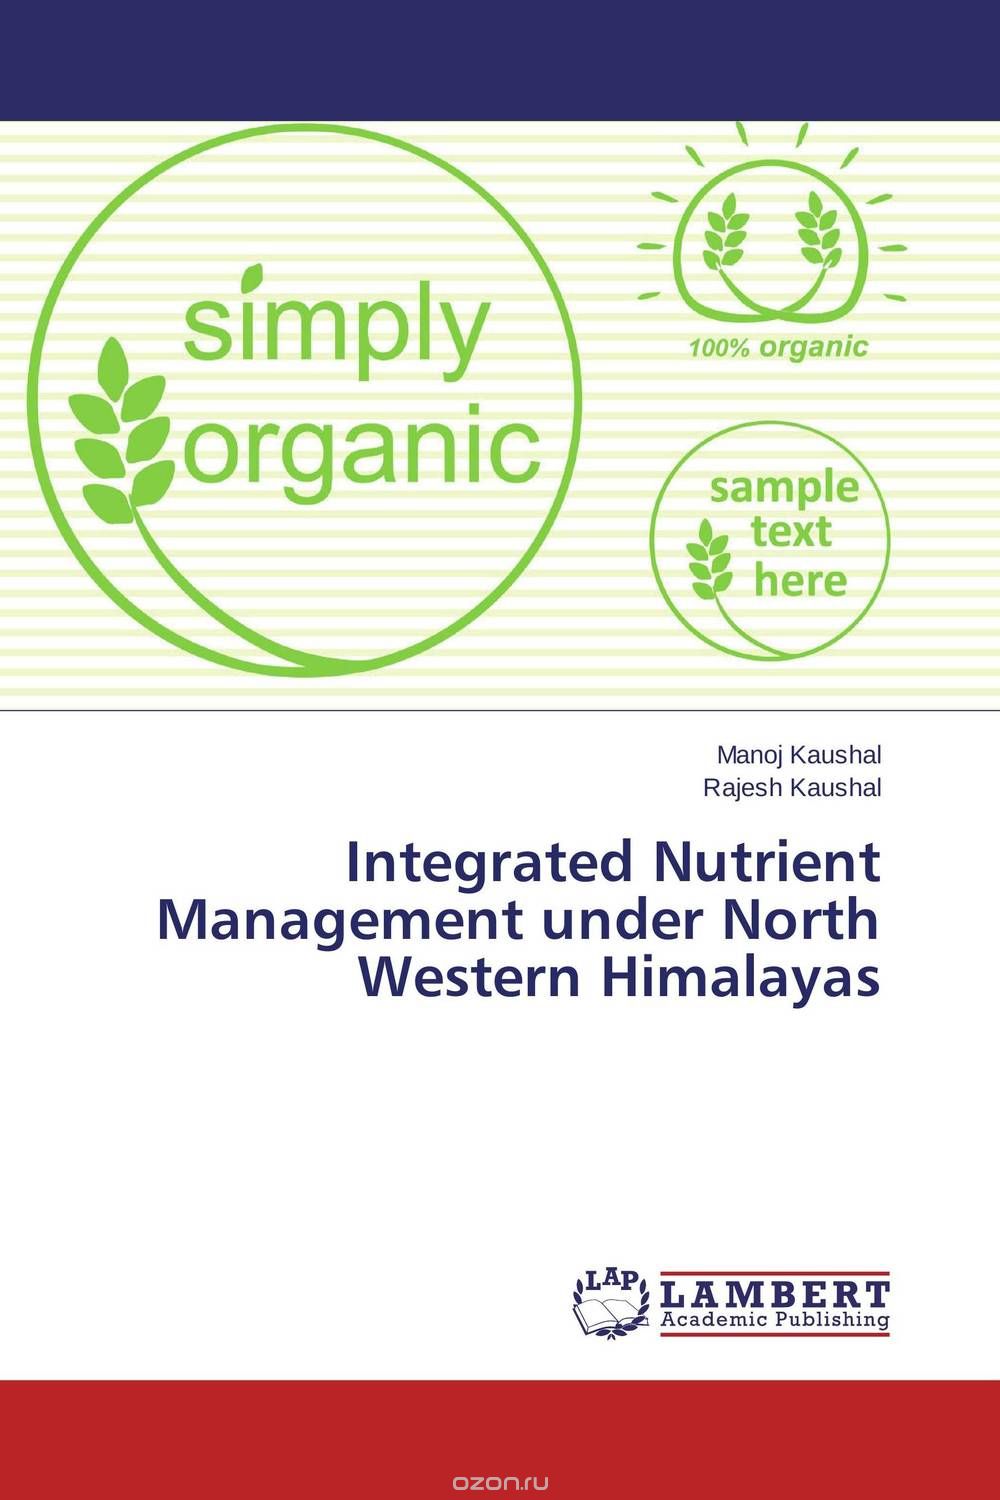 Скачать книгу "Integrated Nutrient Management under North Western Himalayas"